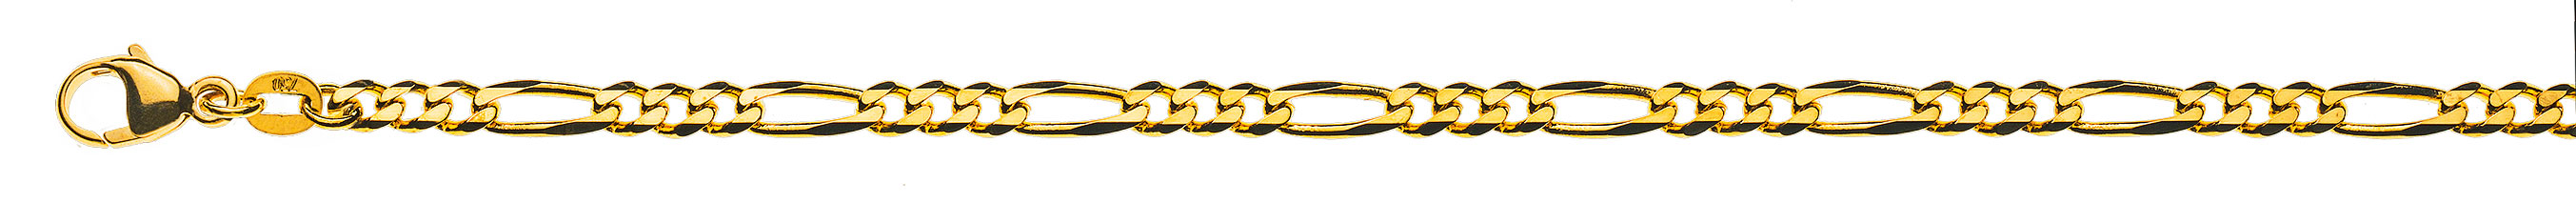 AURONOS Prestige Necklace yellow gold 18K Figaro necklace 60cm 3.4mm